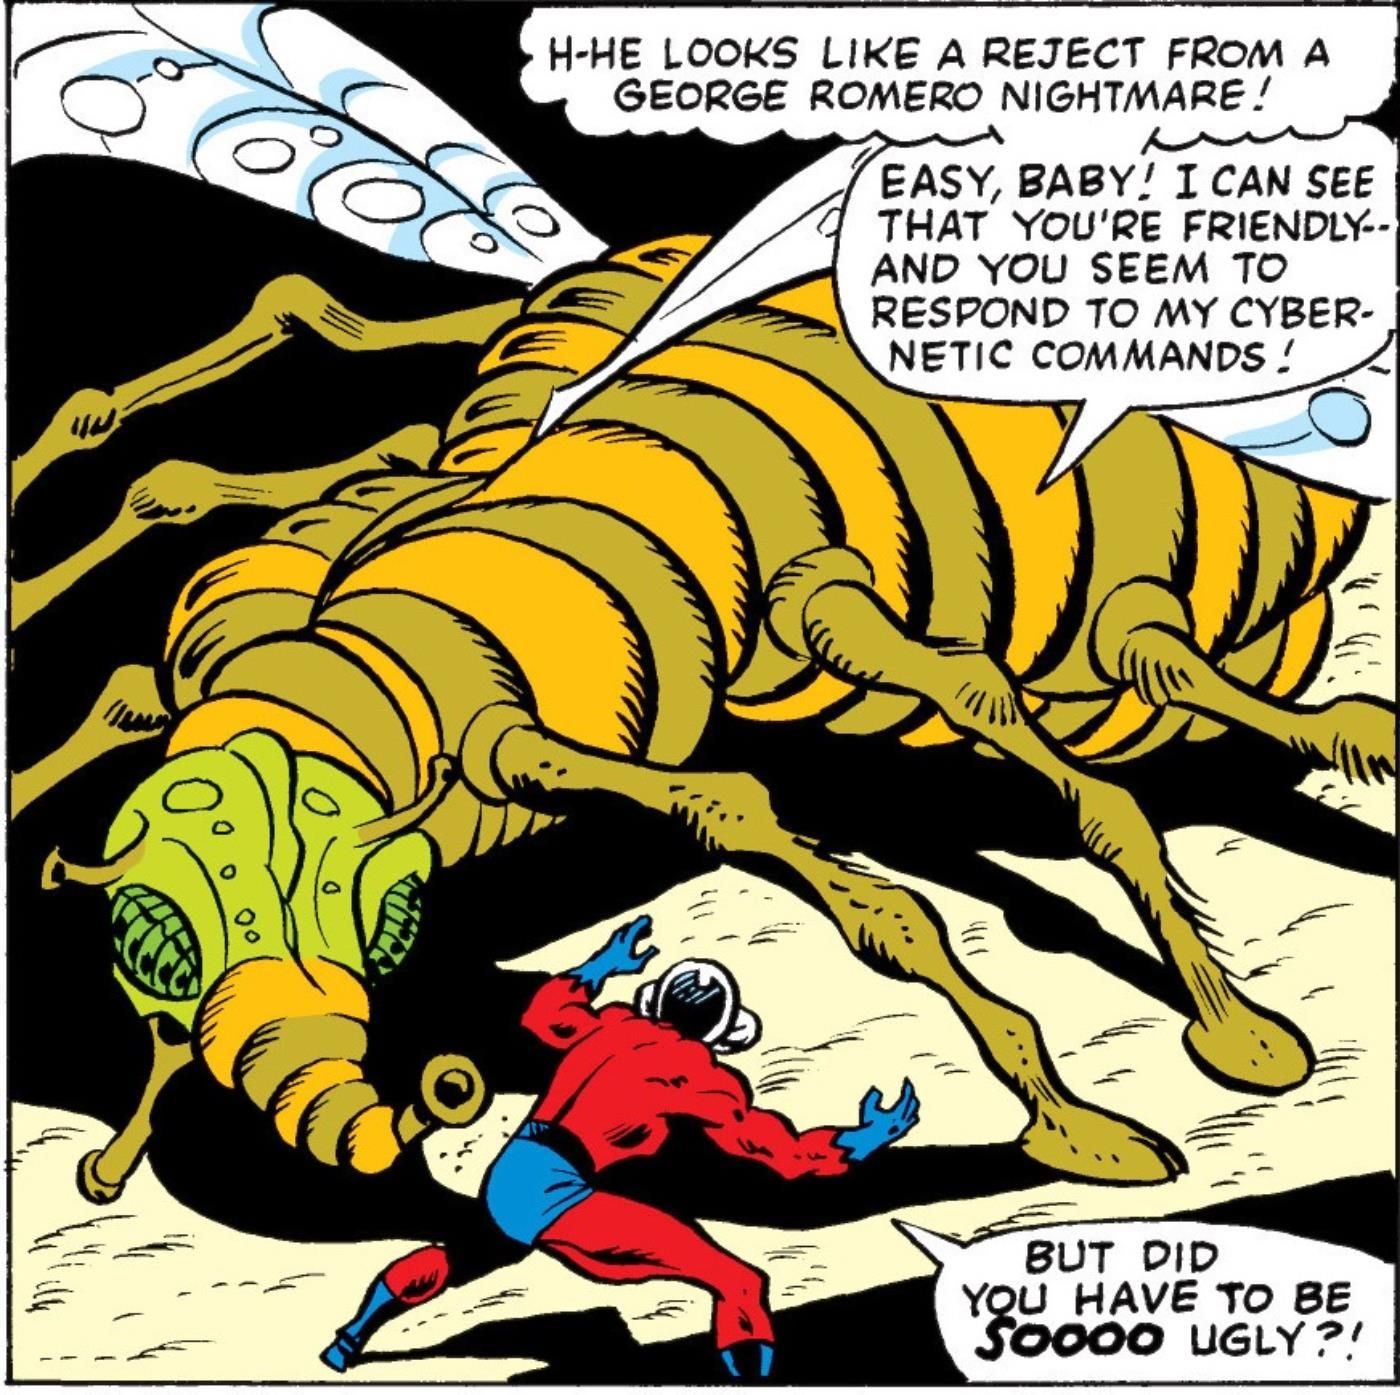 Какая забытая главная черта характера когда-то была у Человека-муравья из Marvel?